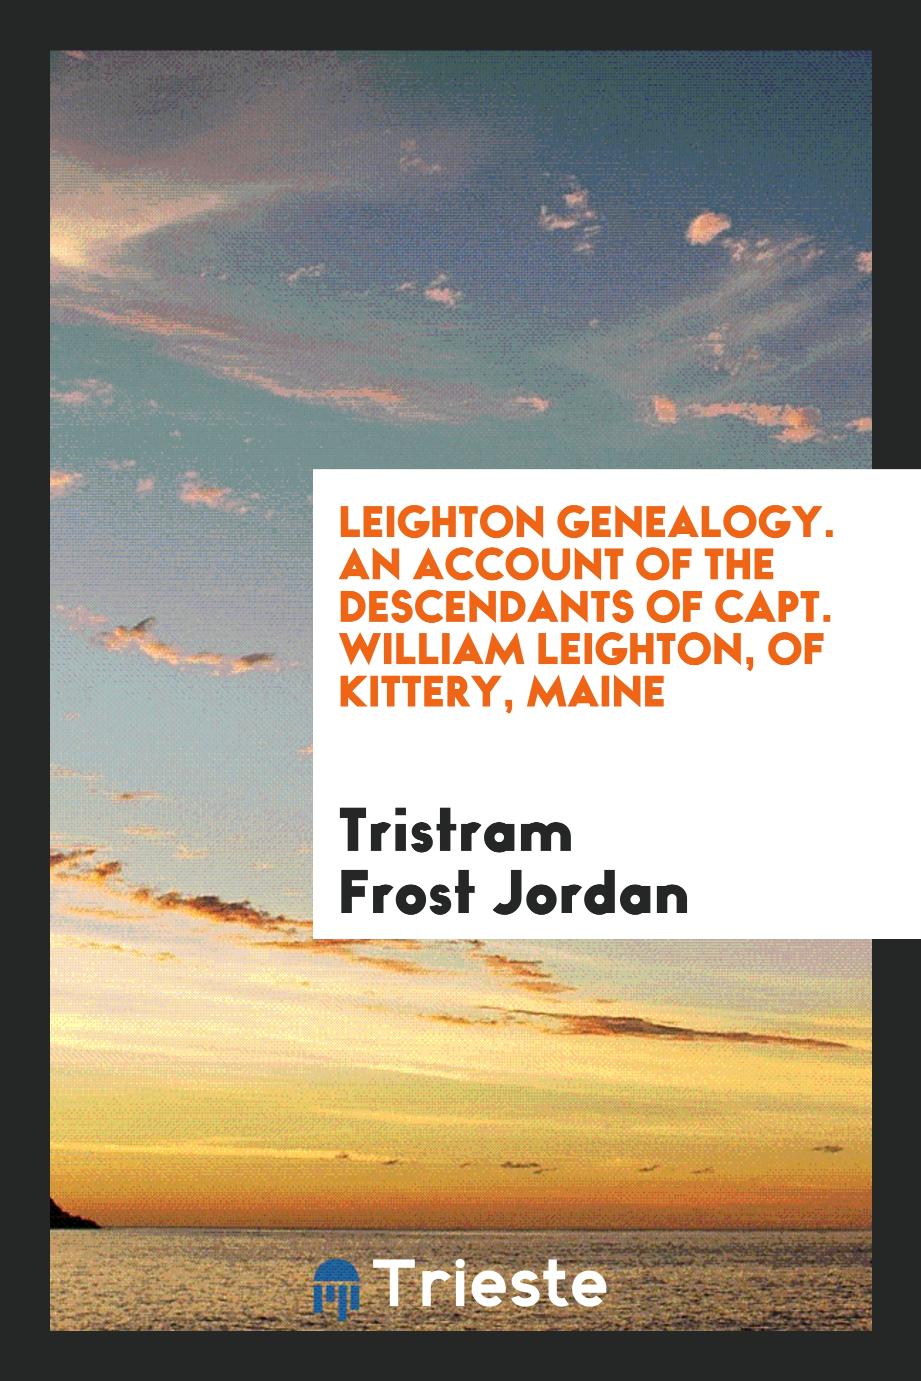 Leighton Genealogy. An Account of the Descendants of Capt. William Leighton, of Kittery, Maine